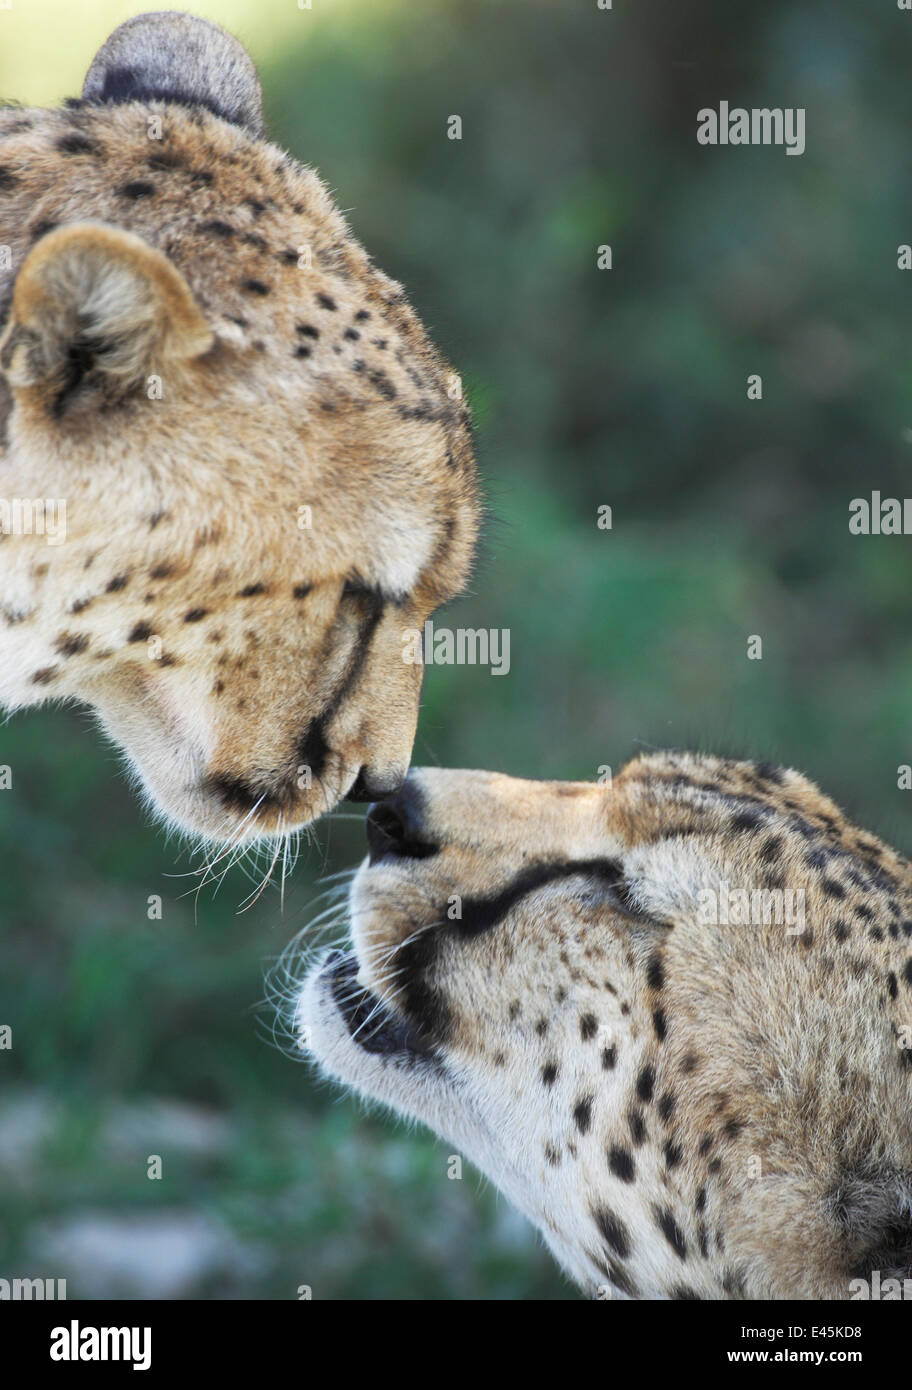 Two Cheetahs (Acinonyx jubatus) touching noses in greeting display, Serengeti NP, Tanzania, East Africa, January Stock Photo